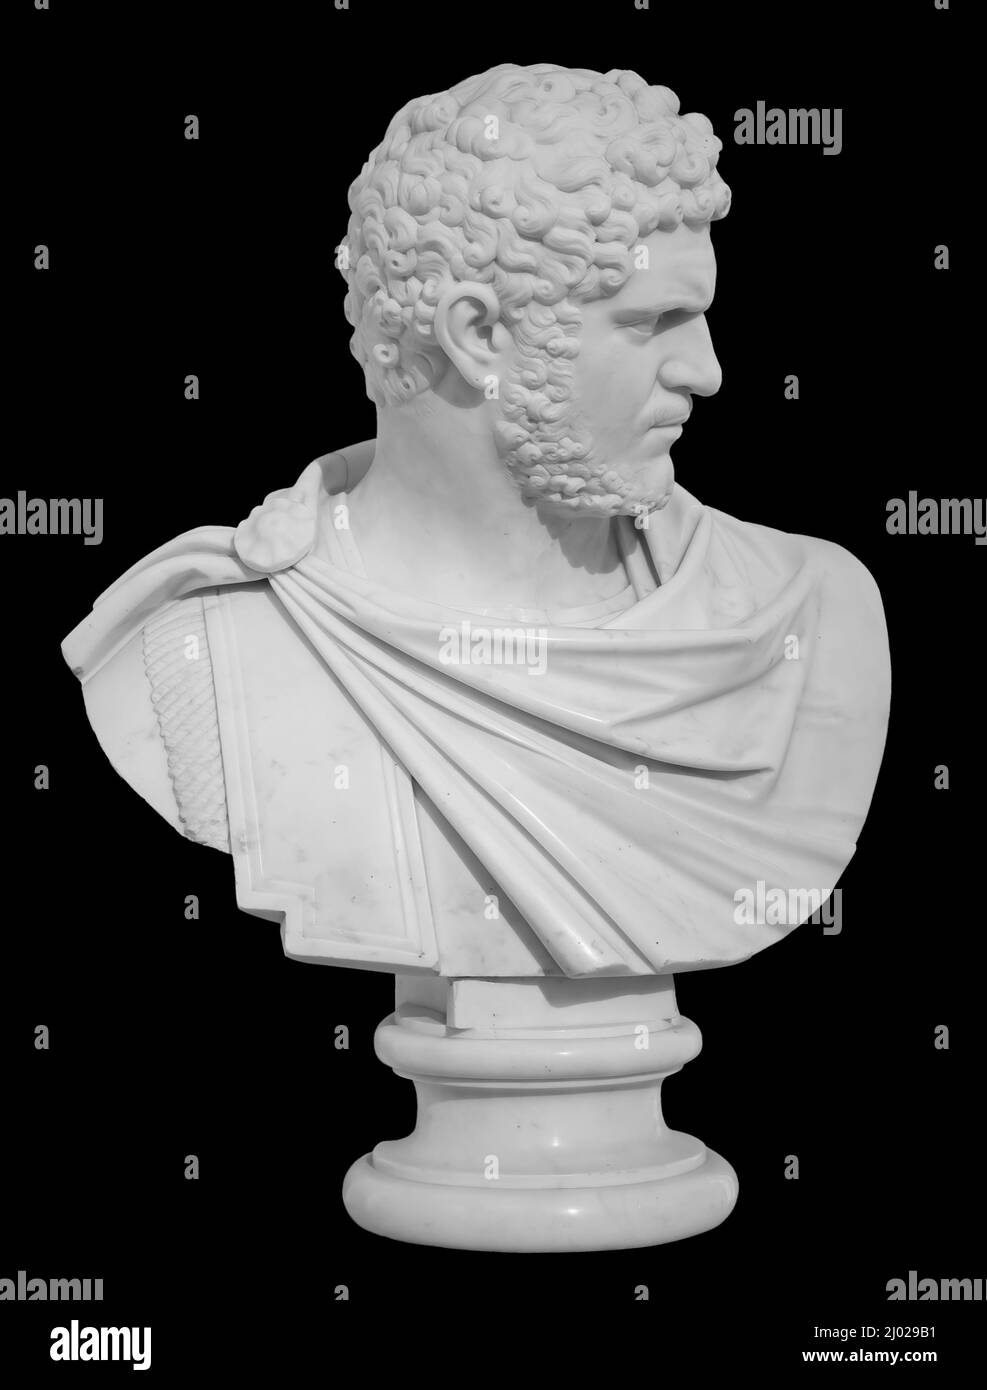 Ancient white marble sculpture bust of Caracalla. Marcus Aurelius Severus Antoninus Augustus known as Antoninus. Roman emperor. Isolated on a black Stock Photo